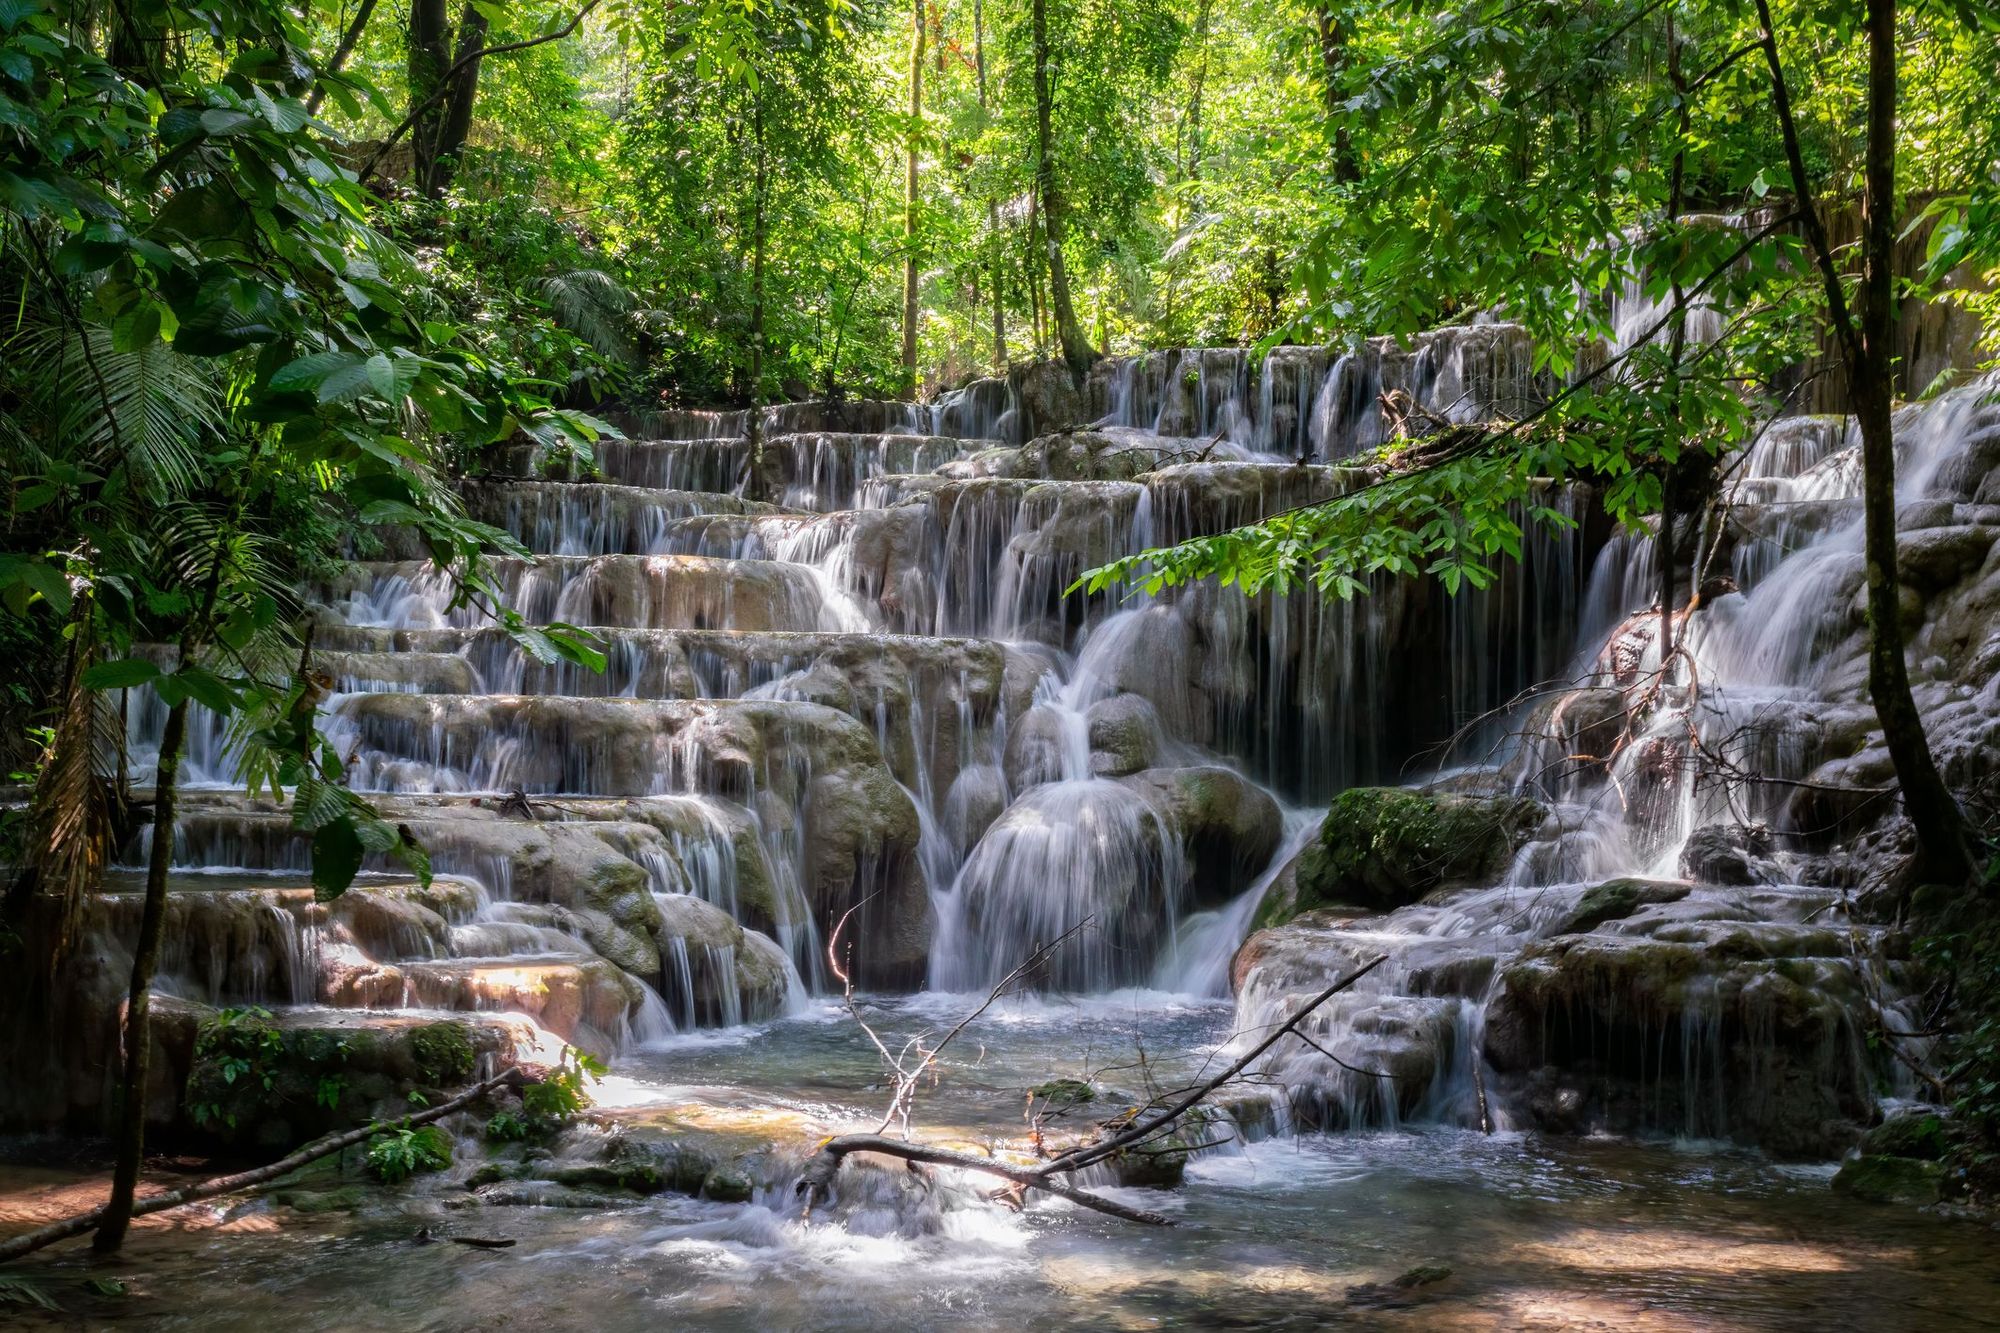 Sombrillas Waterfall, near Palenque Ruins in Chiapas, Mexico